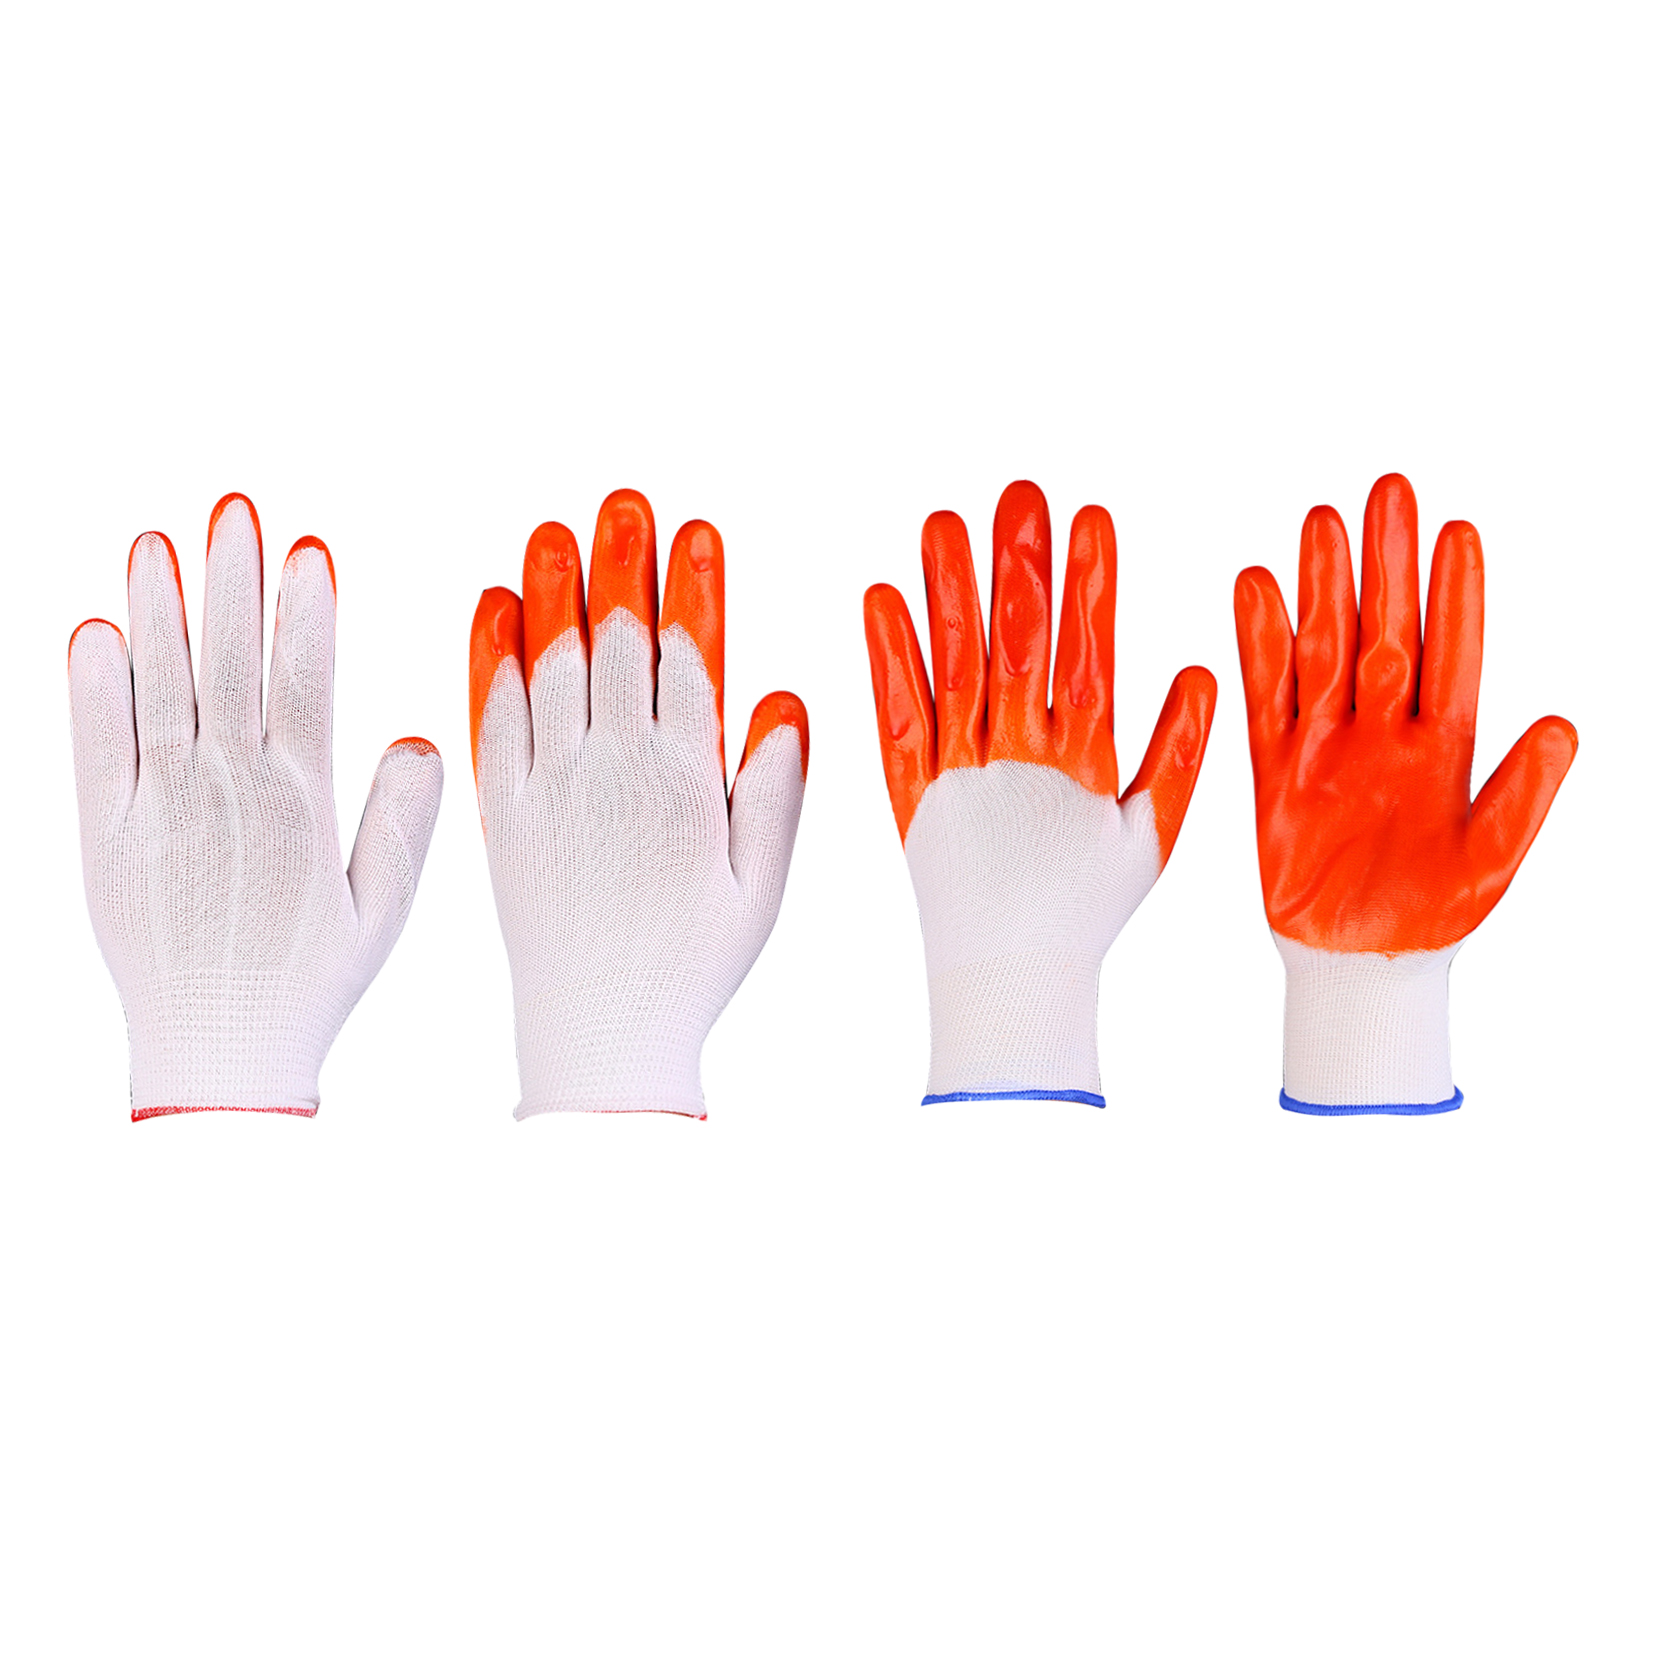 Pvc Coated Orange Nylon Knitted Protective Safety Work Glove